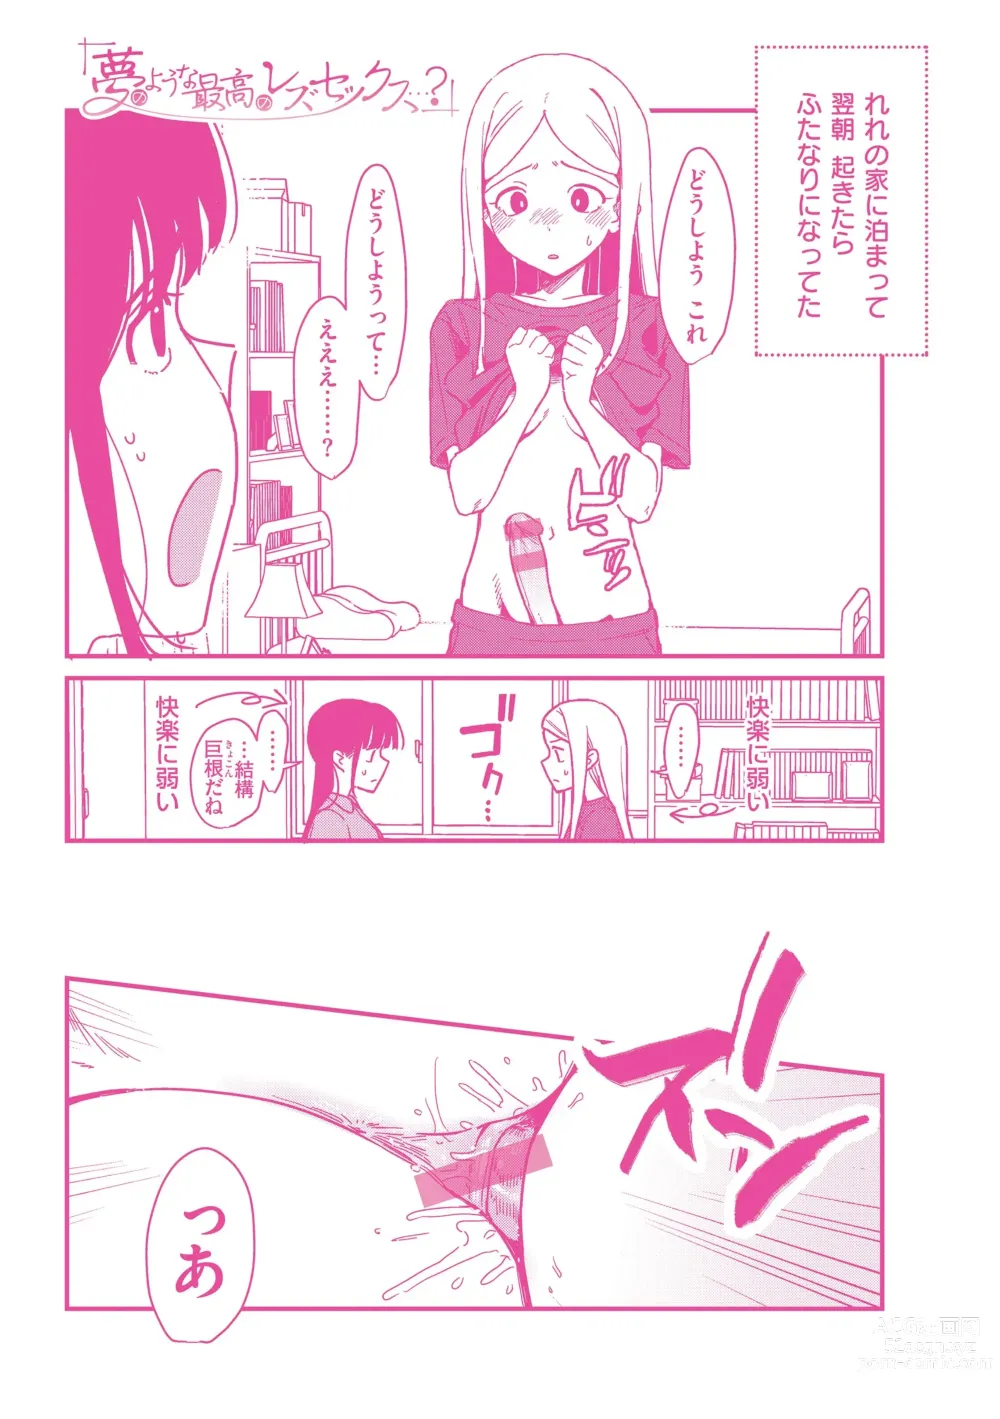 Page 164 of manga Wakarasete. - Show me reality.